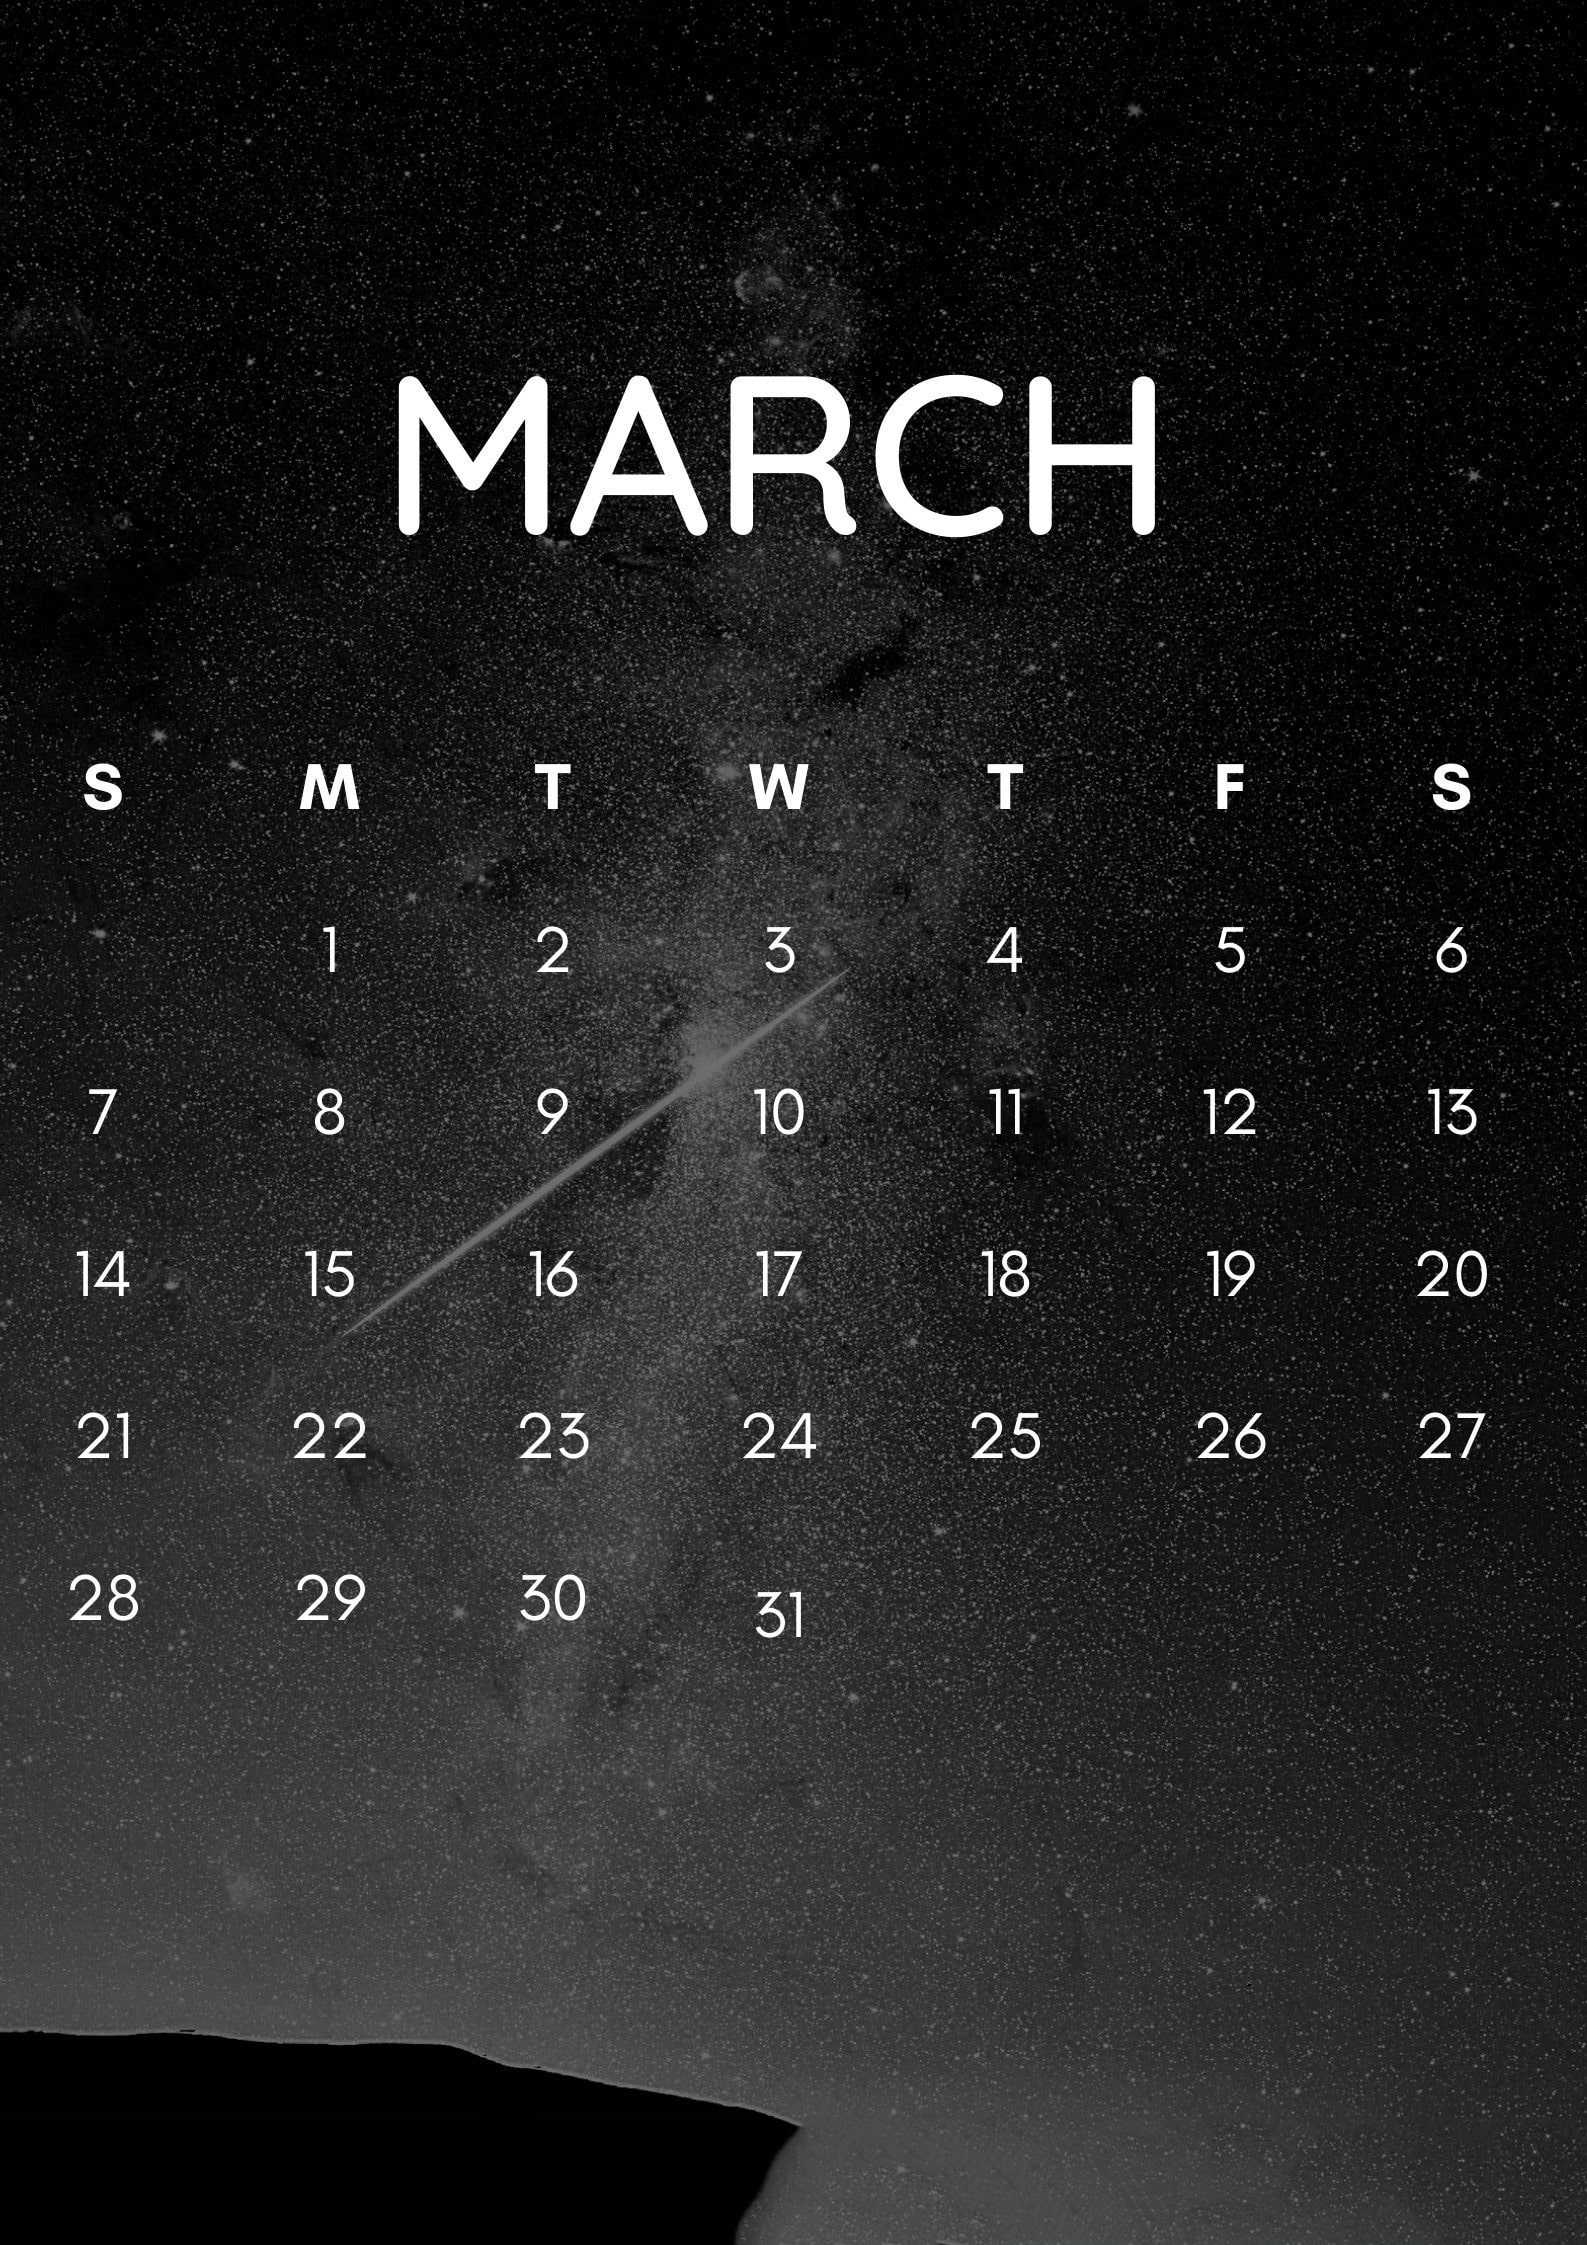 March calendar. Календарь на месяц. Календарь март. Календарь 2021 айфон. Заставка на айфон календарь.